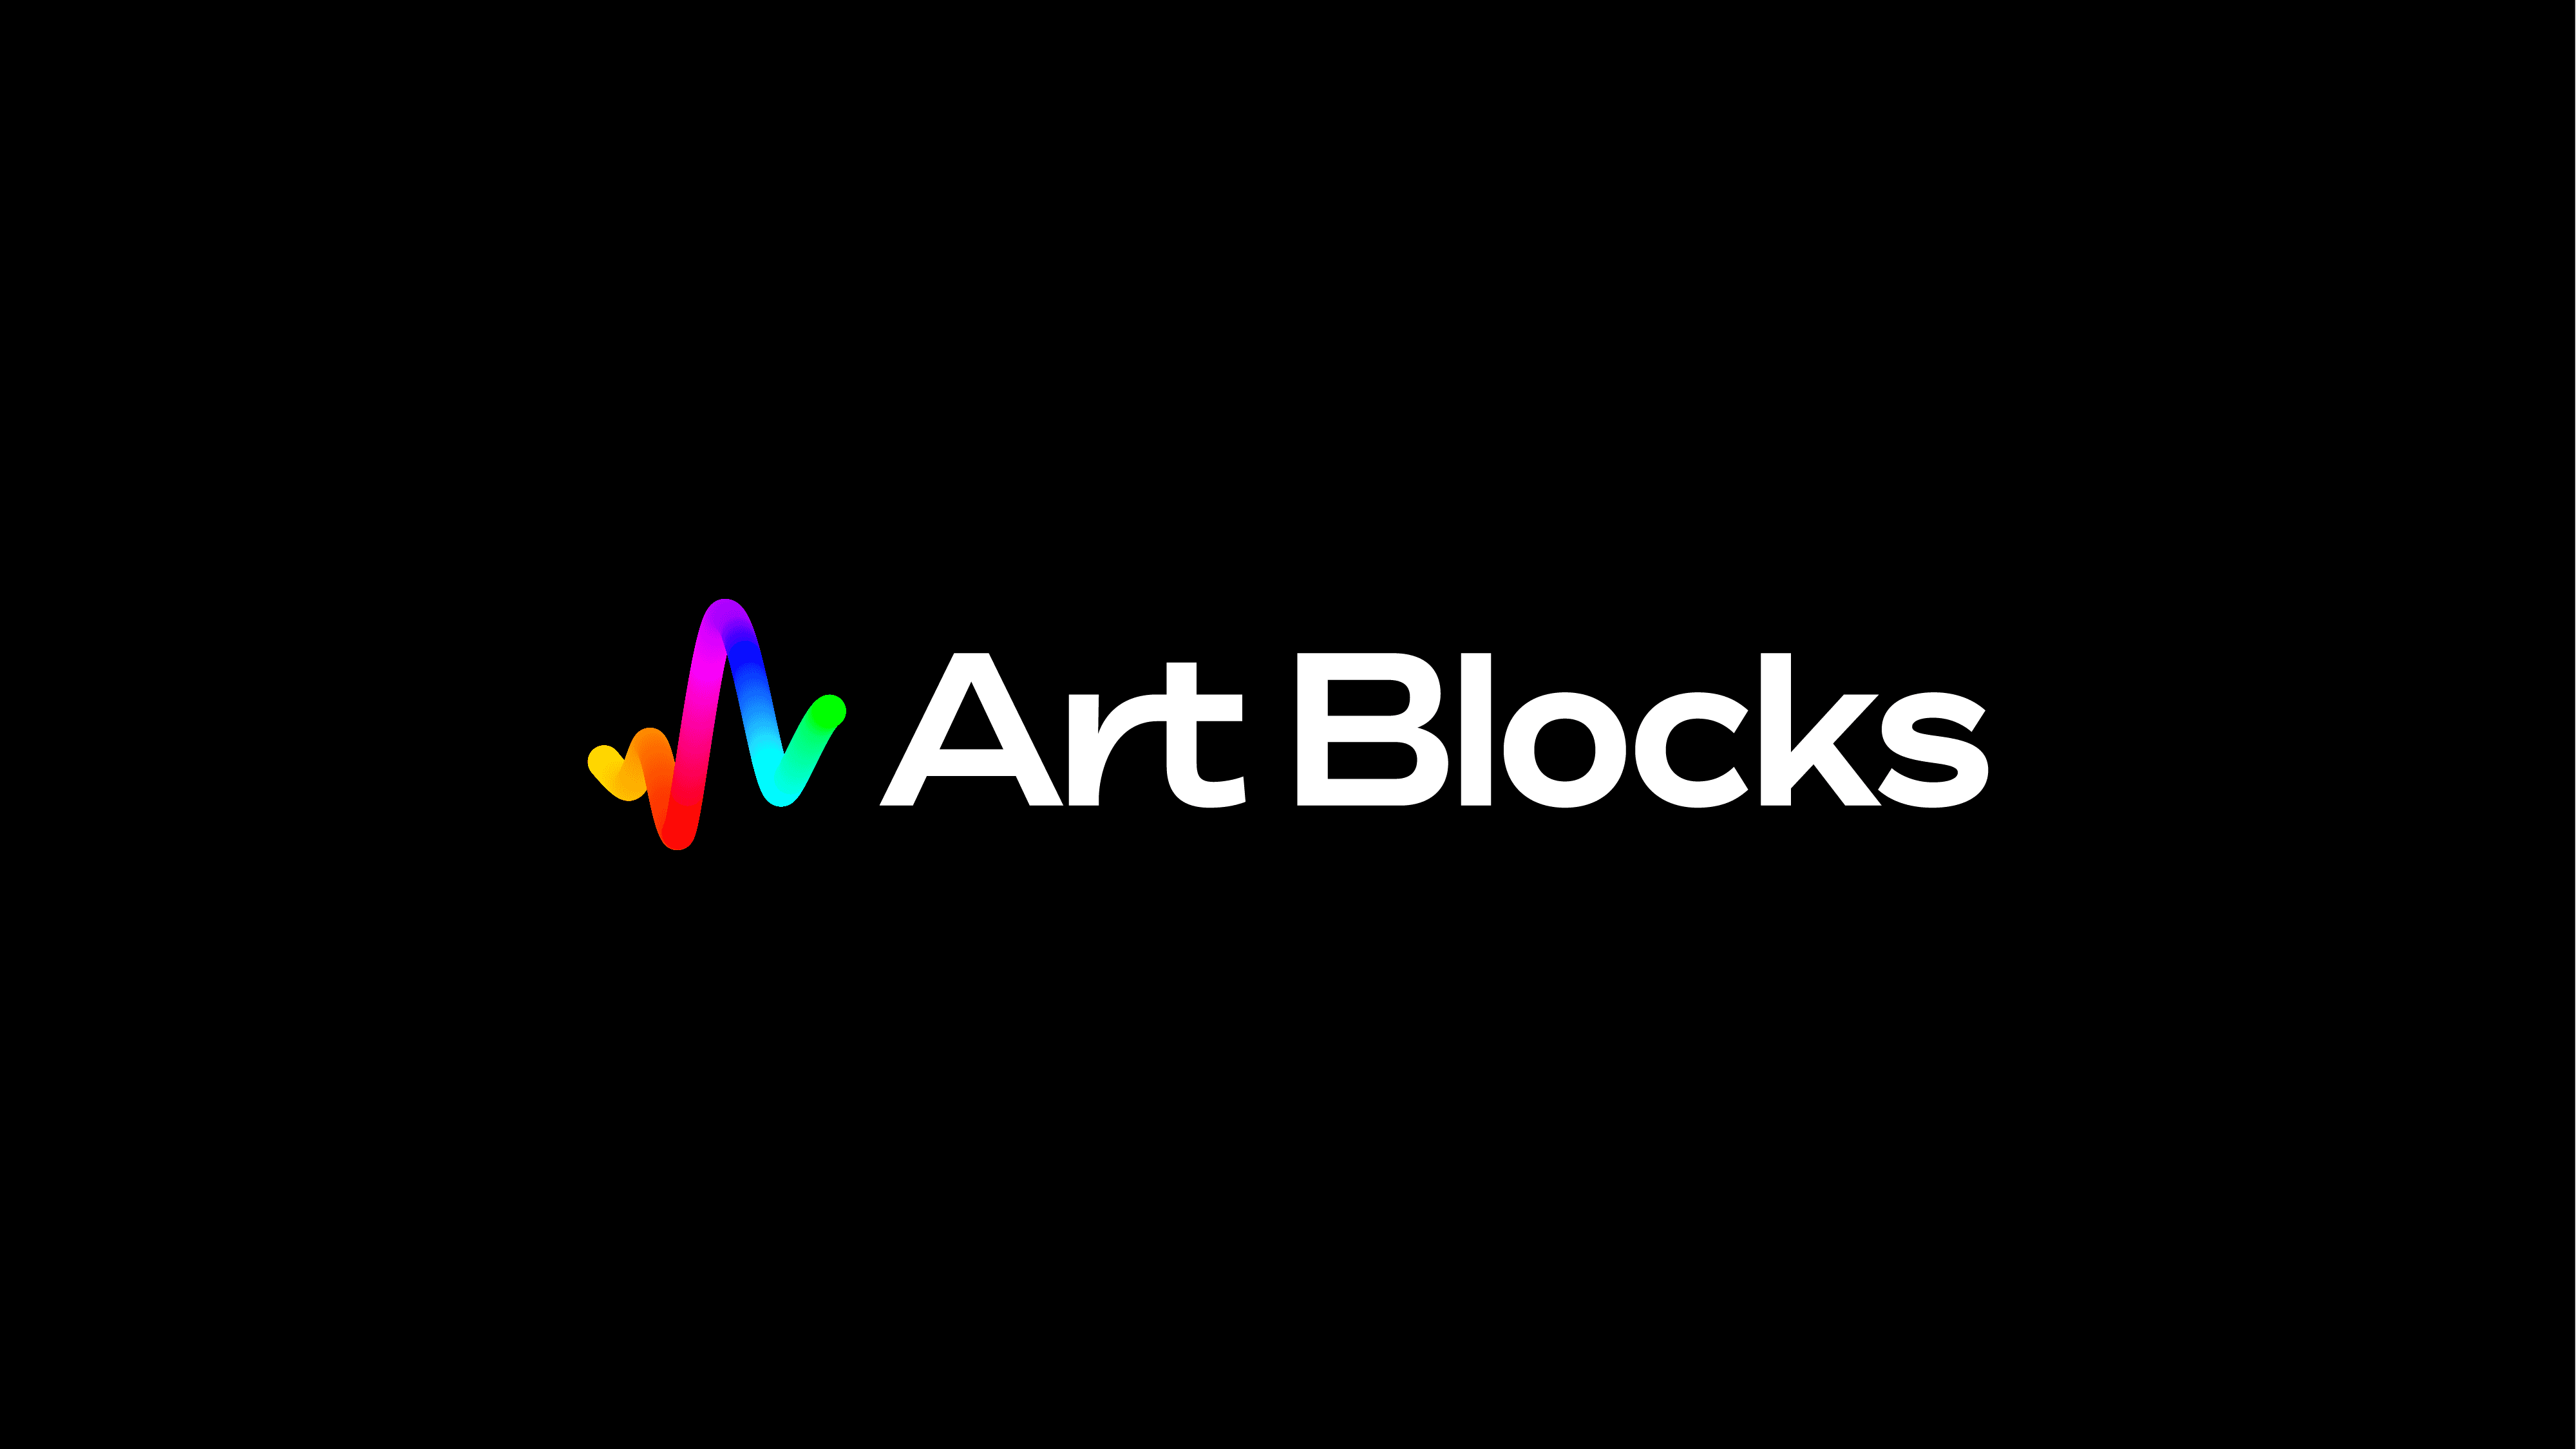 Art_Blocks_Corporate_Collection 横幅